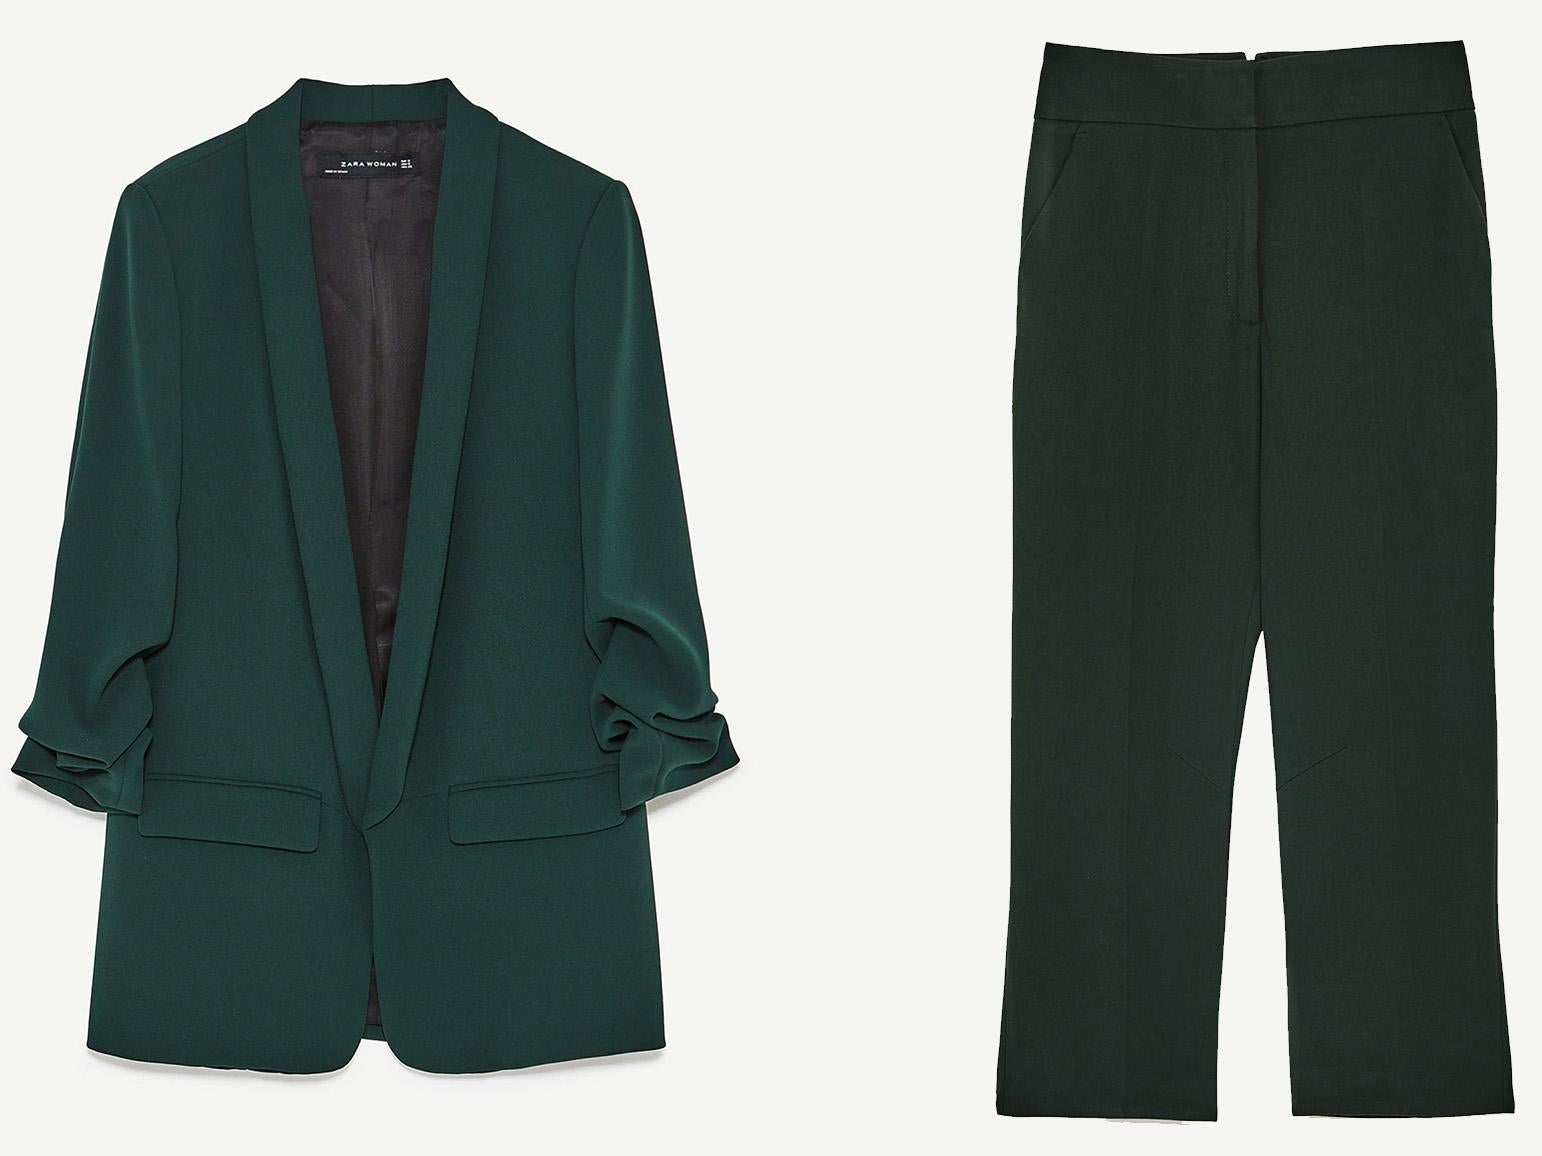 Roll-up Sleeve Jacket, £69.99, High Waist Trousers, £29.99, Zara